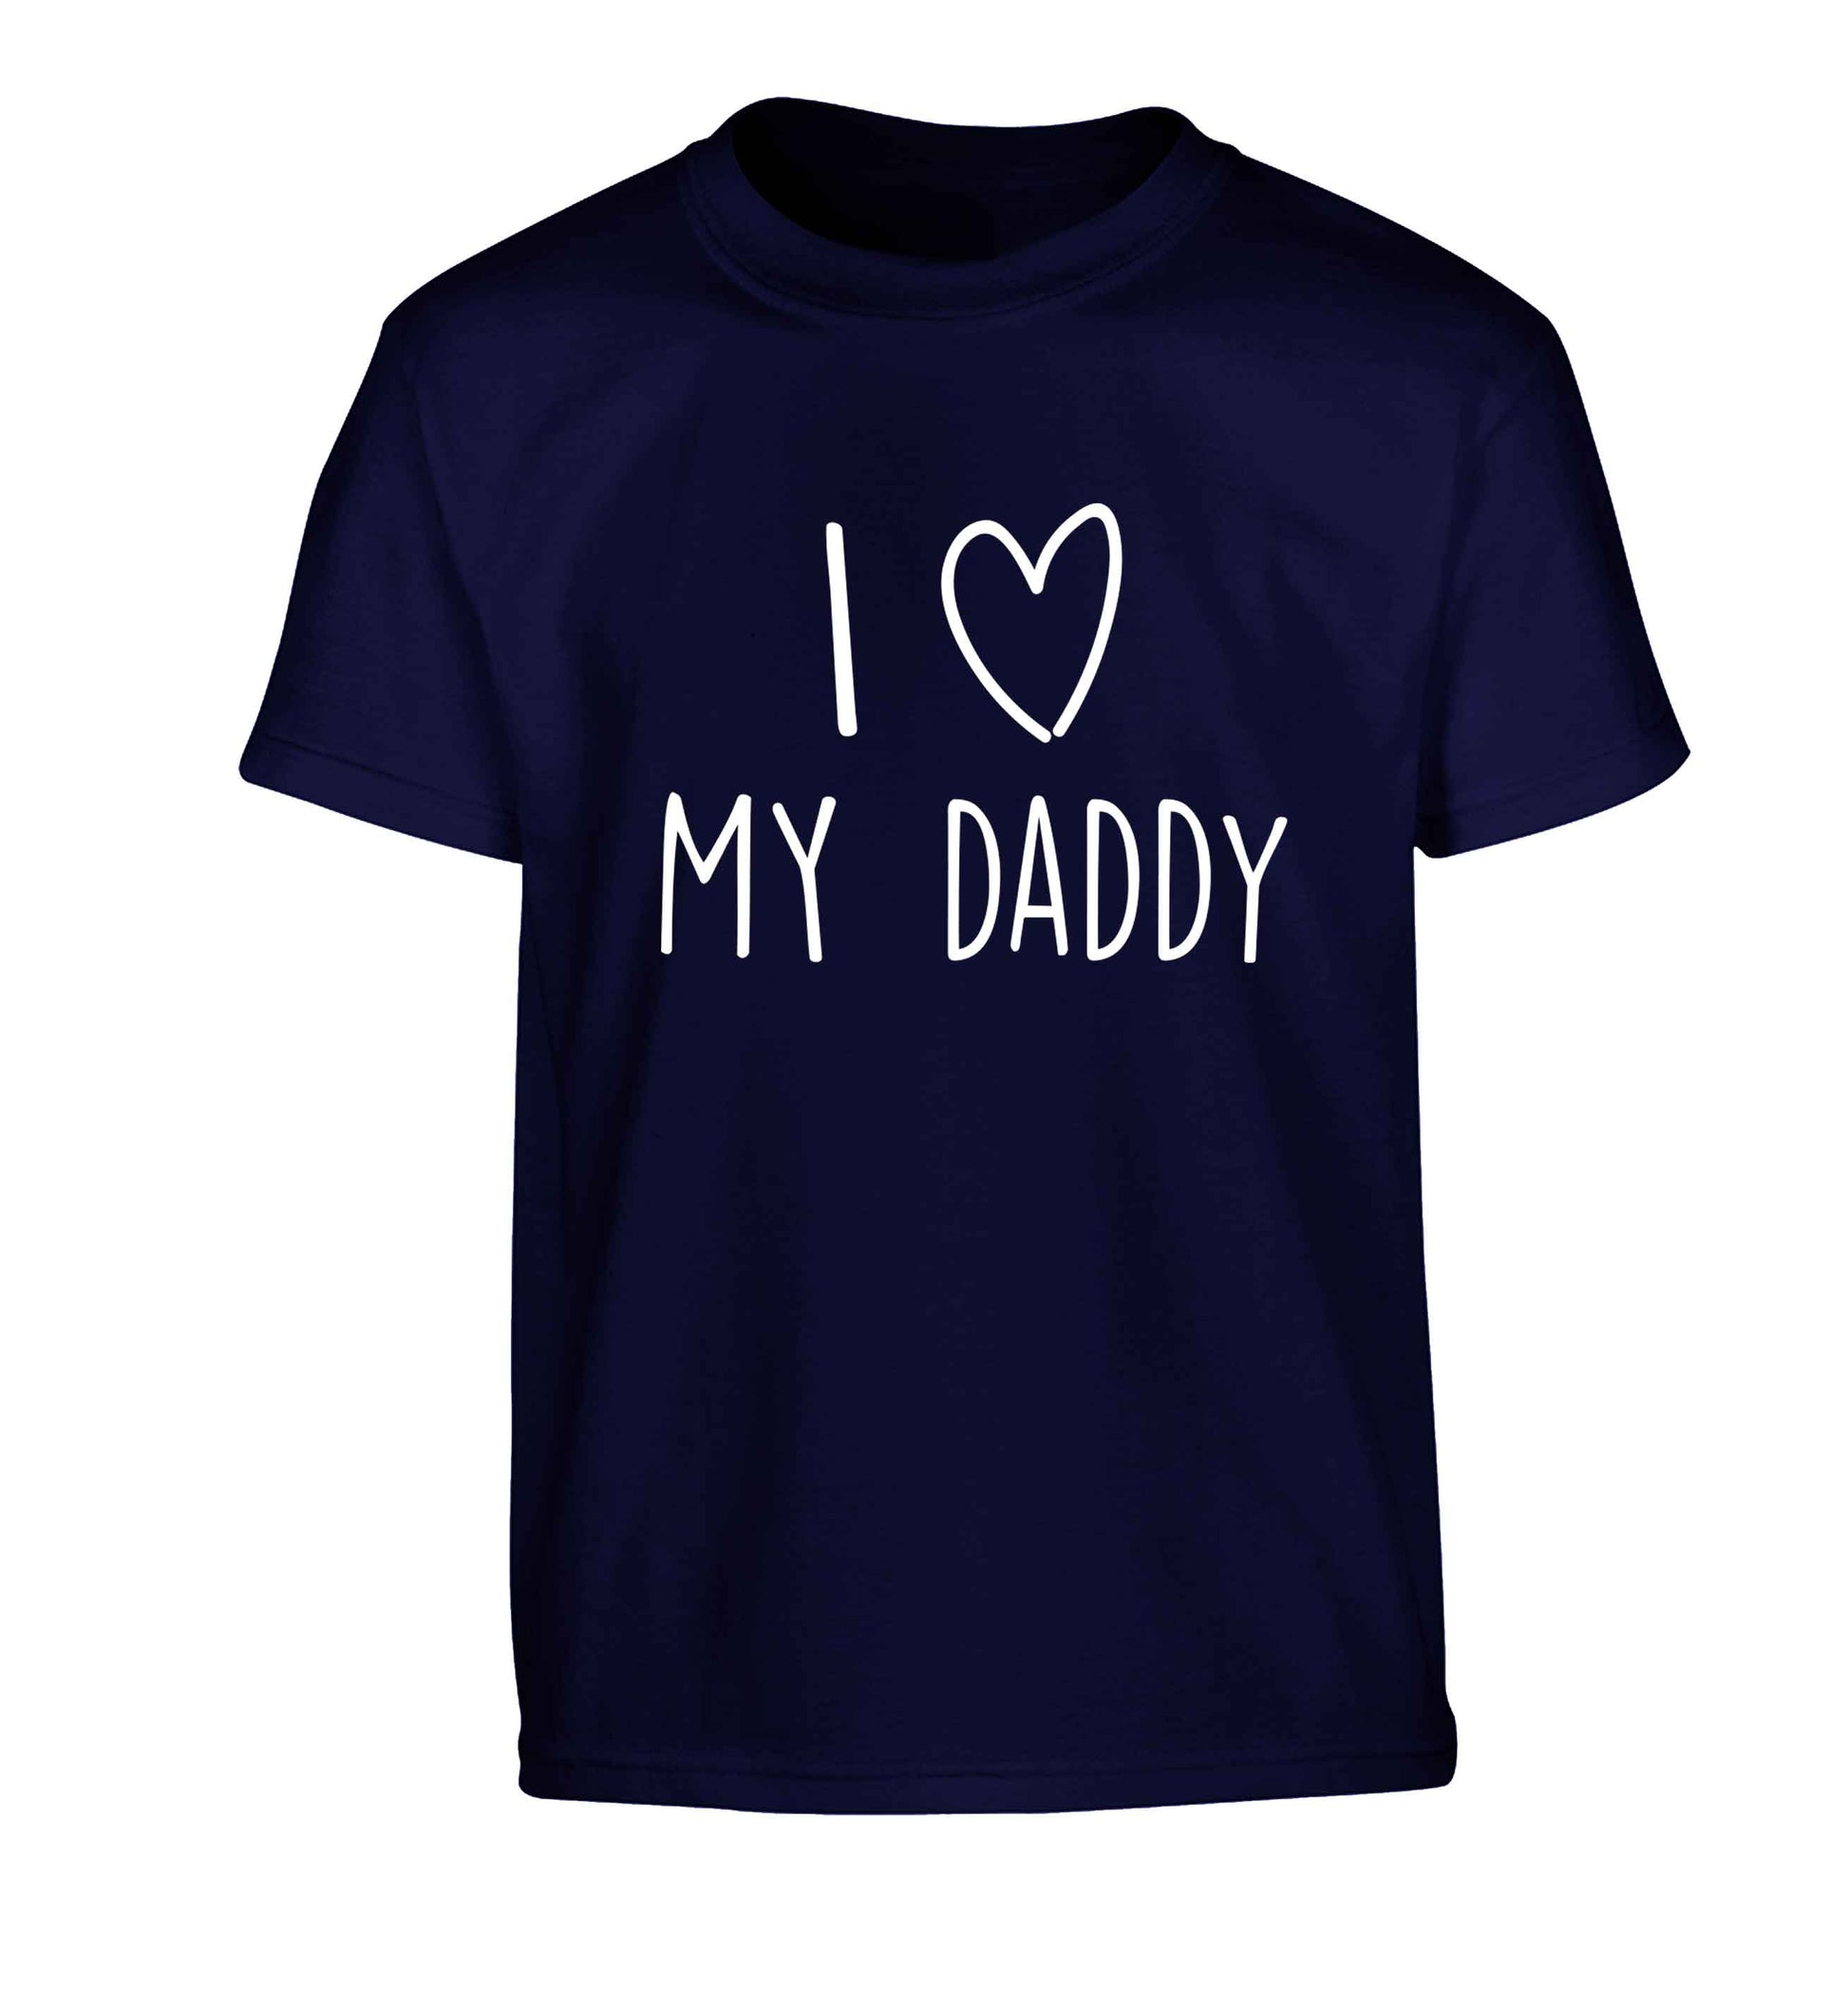 I love my daddy Children's navy Tshirt 12-13 Years